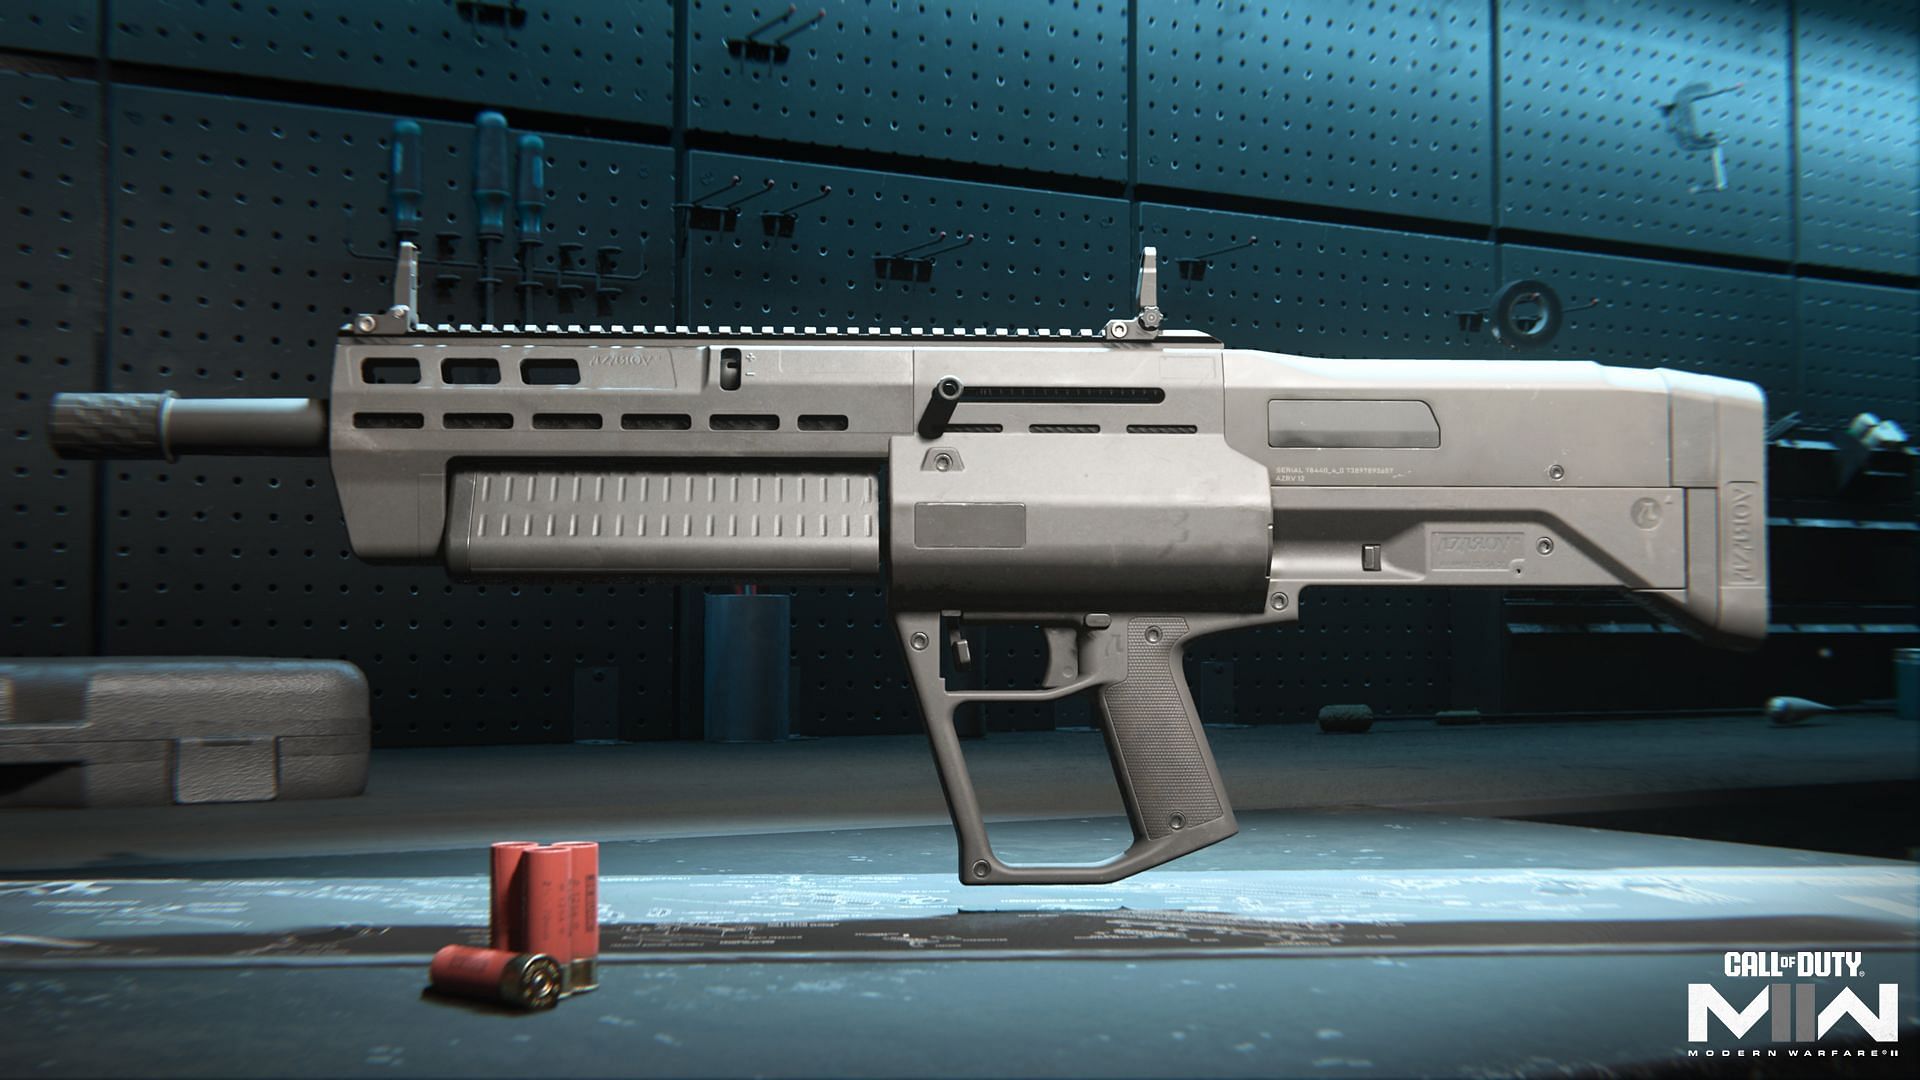 Briand new MX Guardian shotgun in Modern Warfare 2 Season 4 Reloaded (Image via Activision)